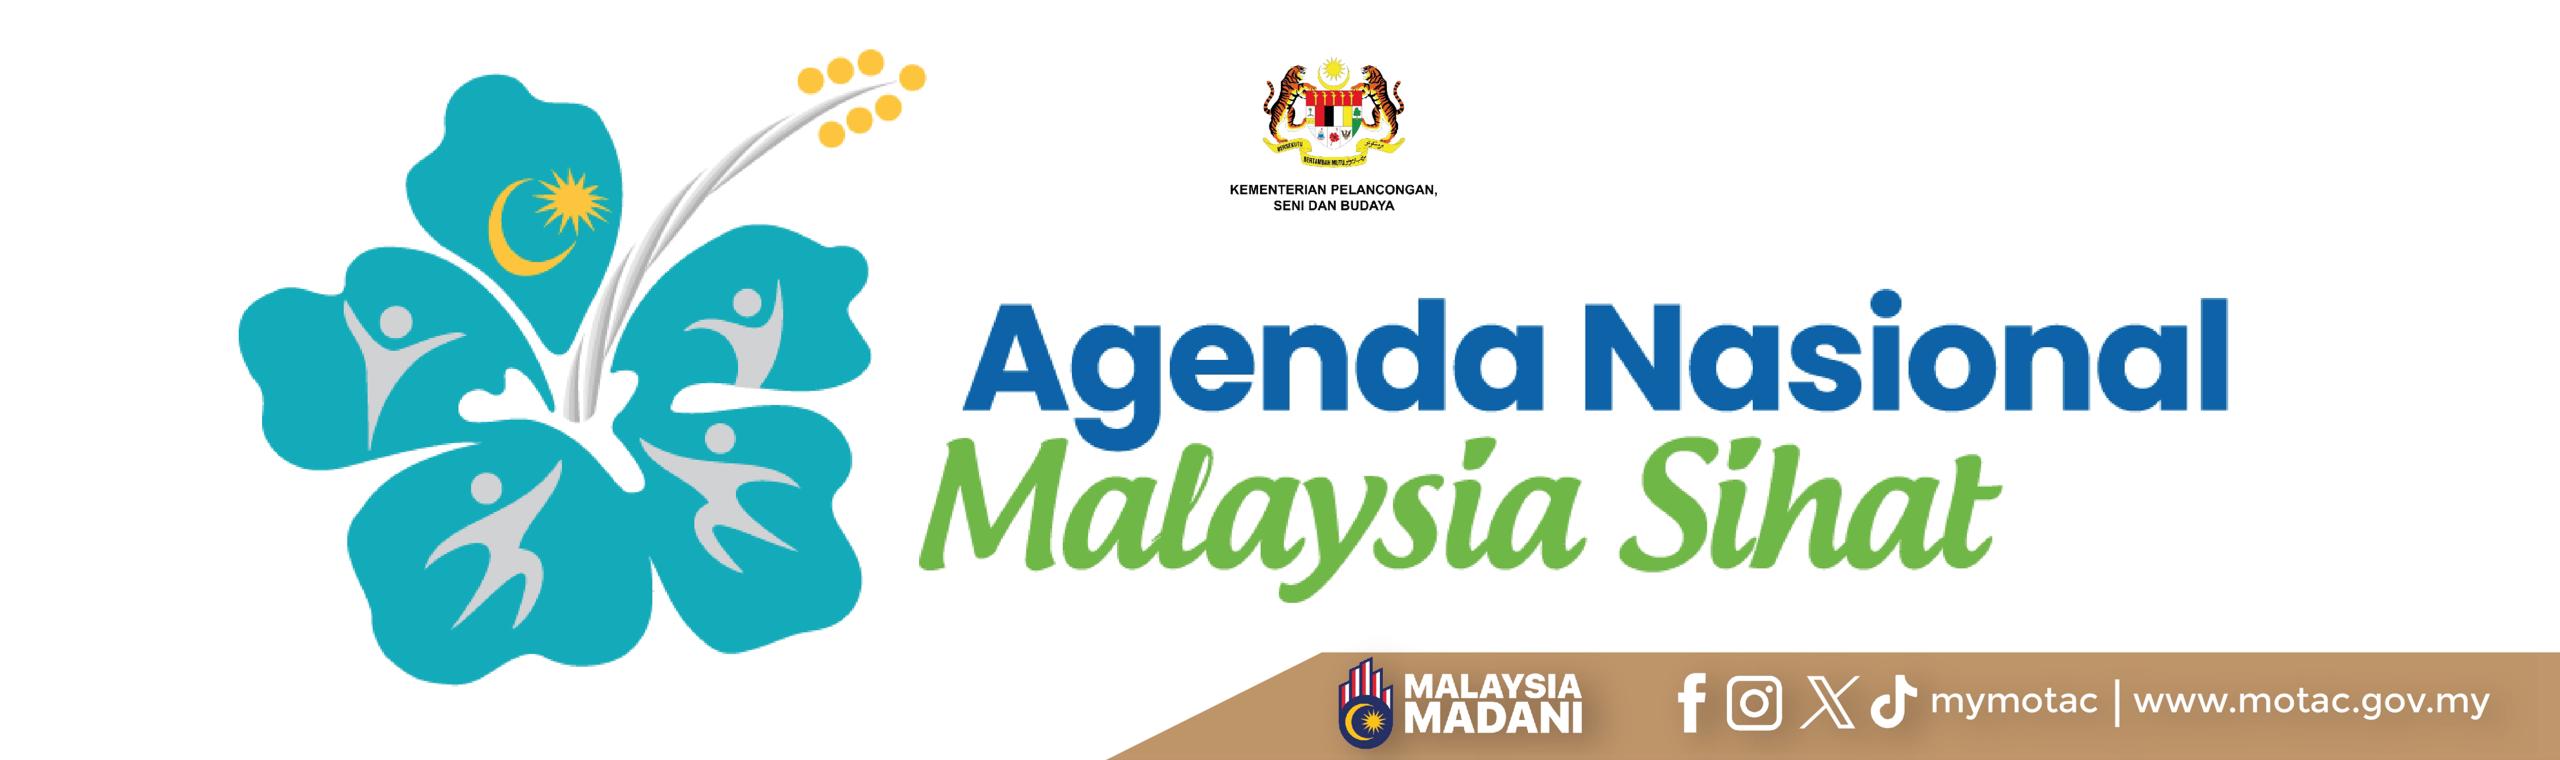 Agenda Nasional Malaysia Sihat (ANMS)